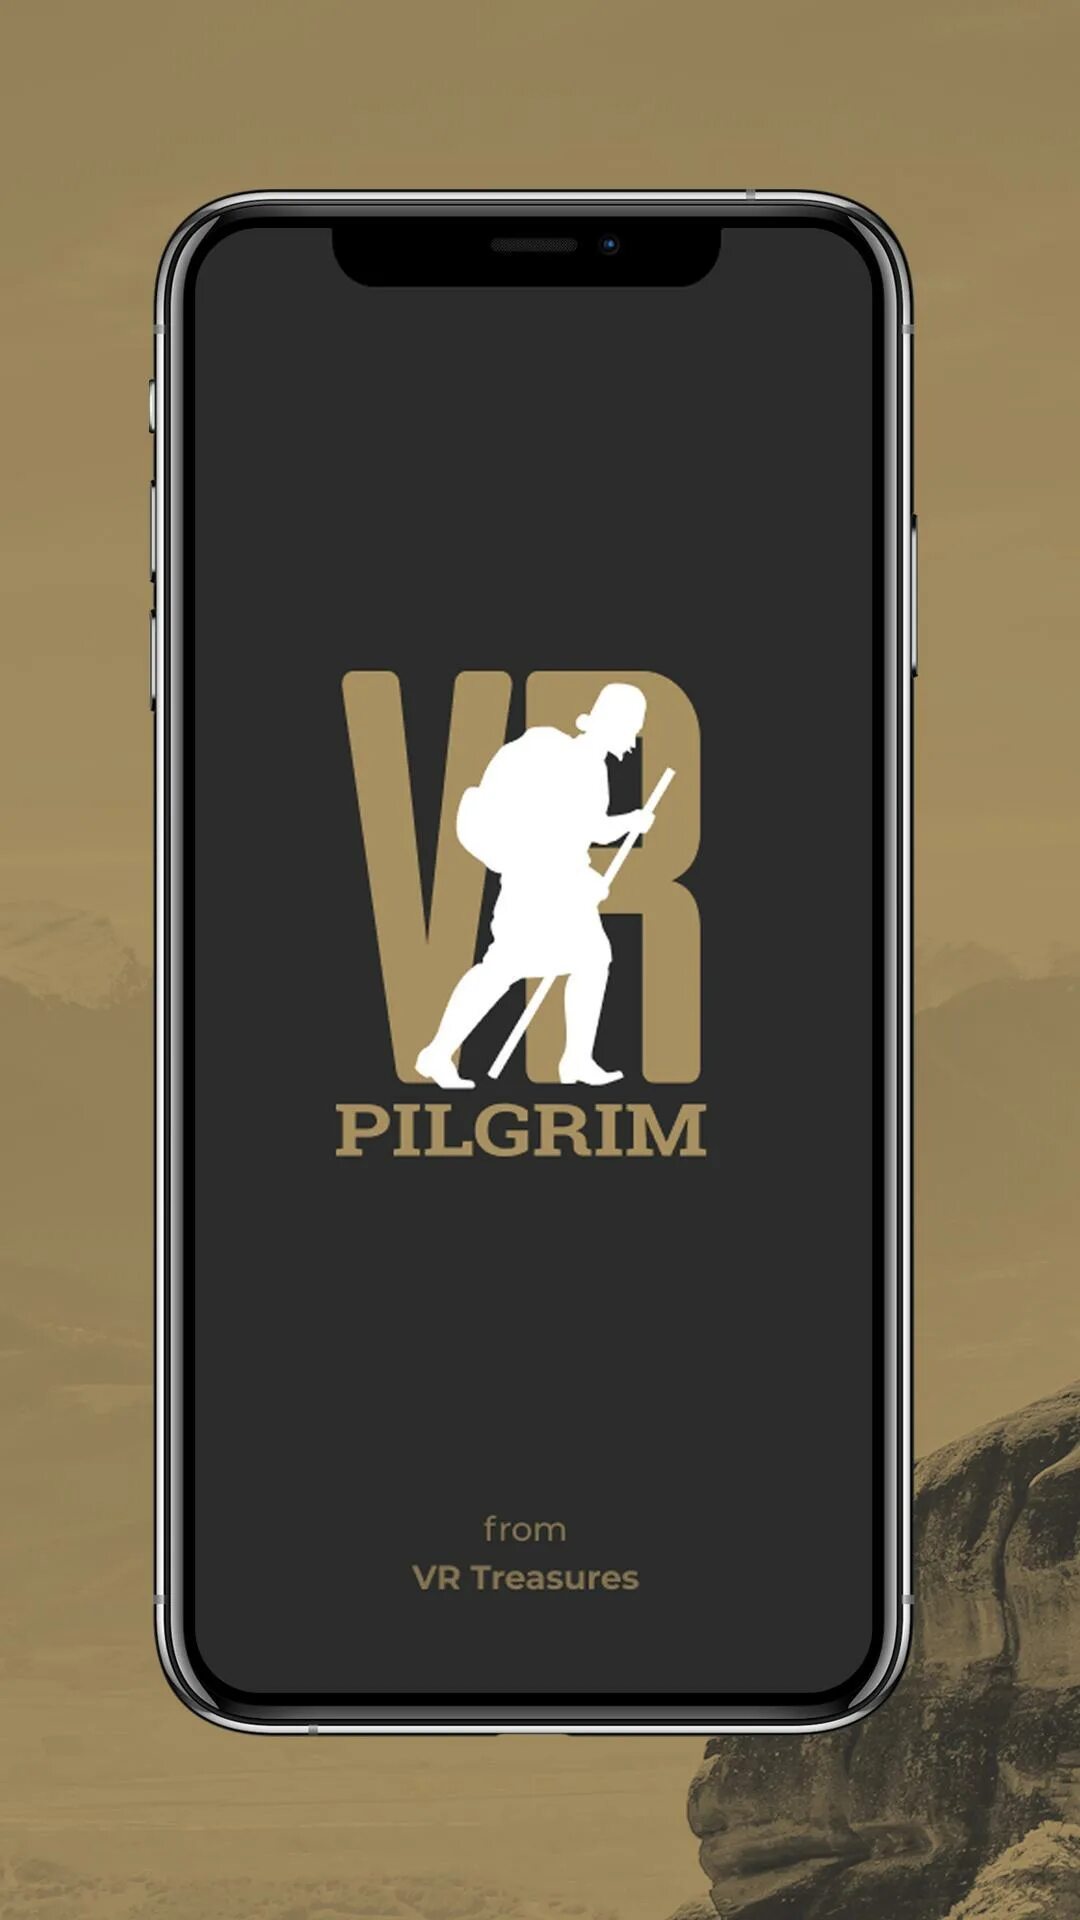 Pilgrim from VR. Pilgrims игра на андроид. VR Treasures.